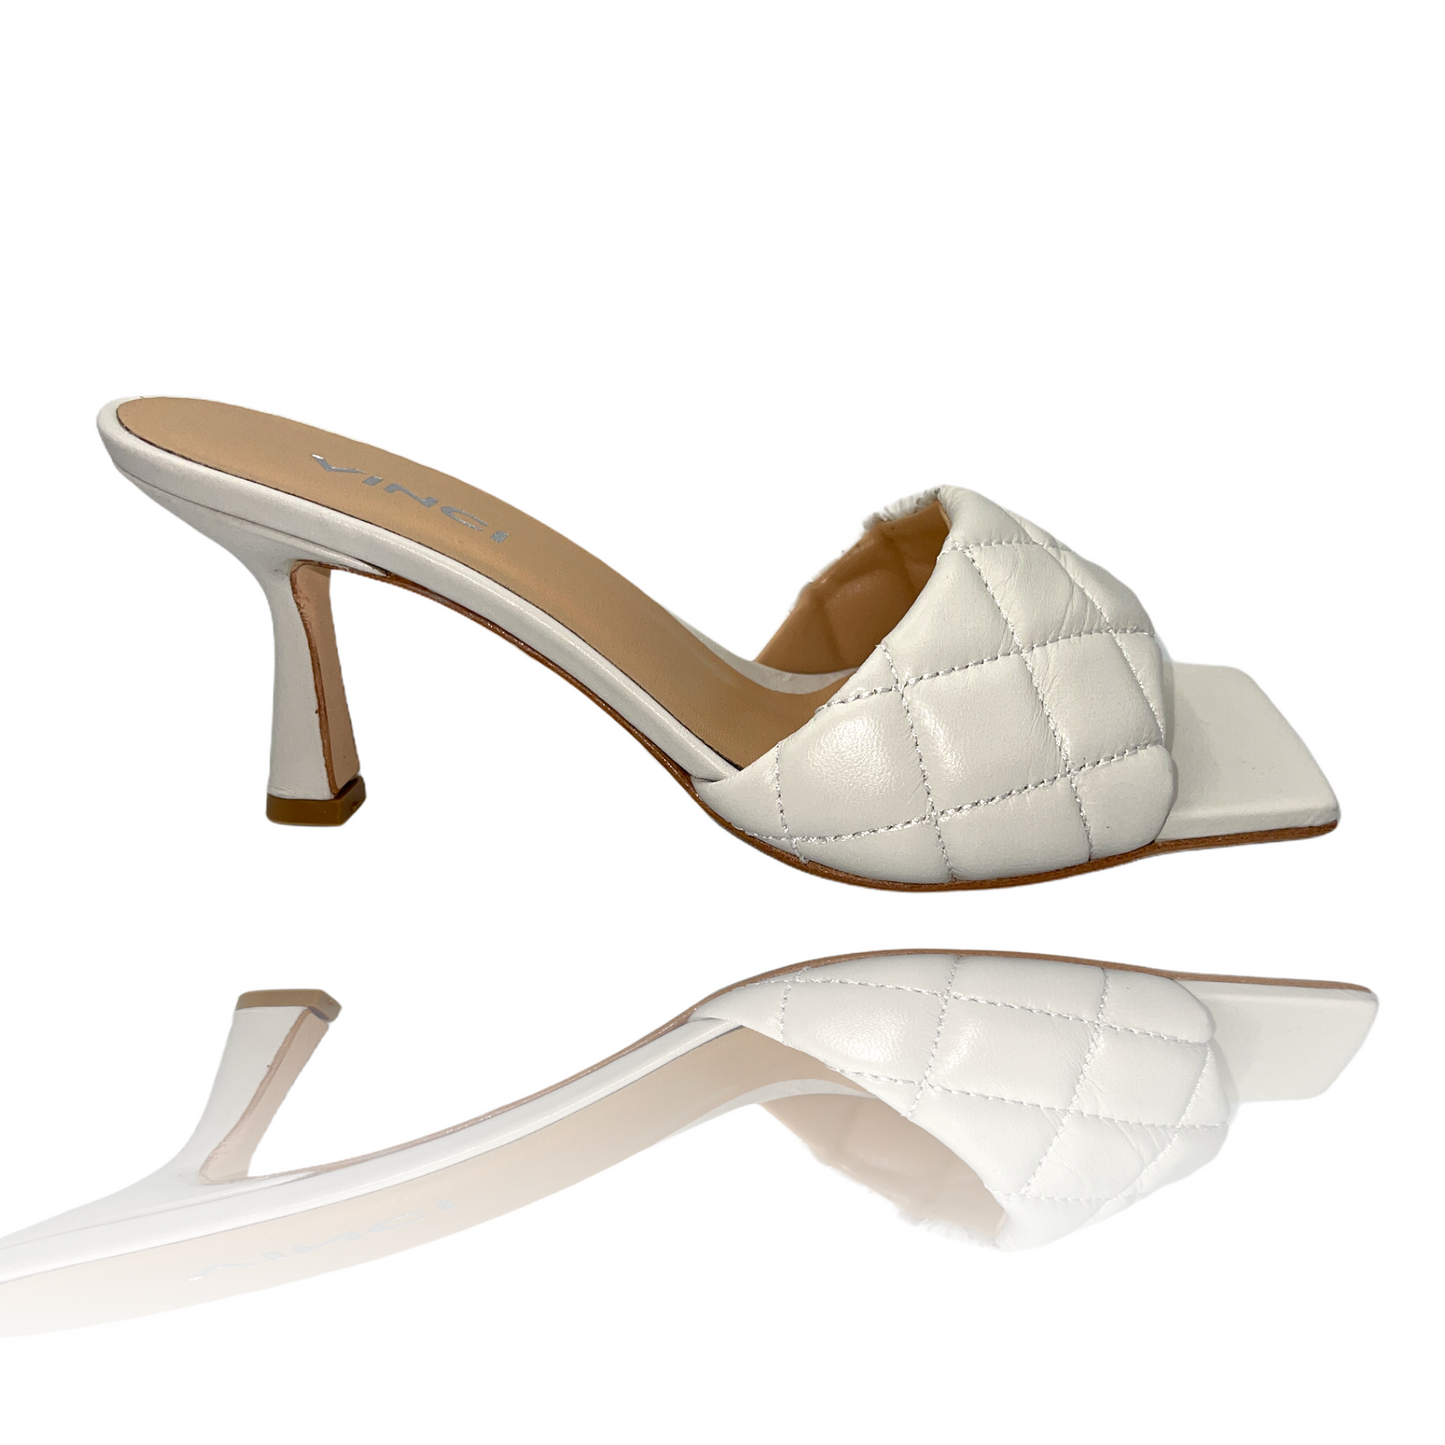 The Ambler White Leather Sandal Final Sale!